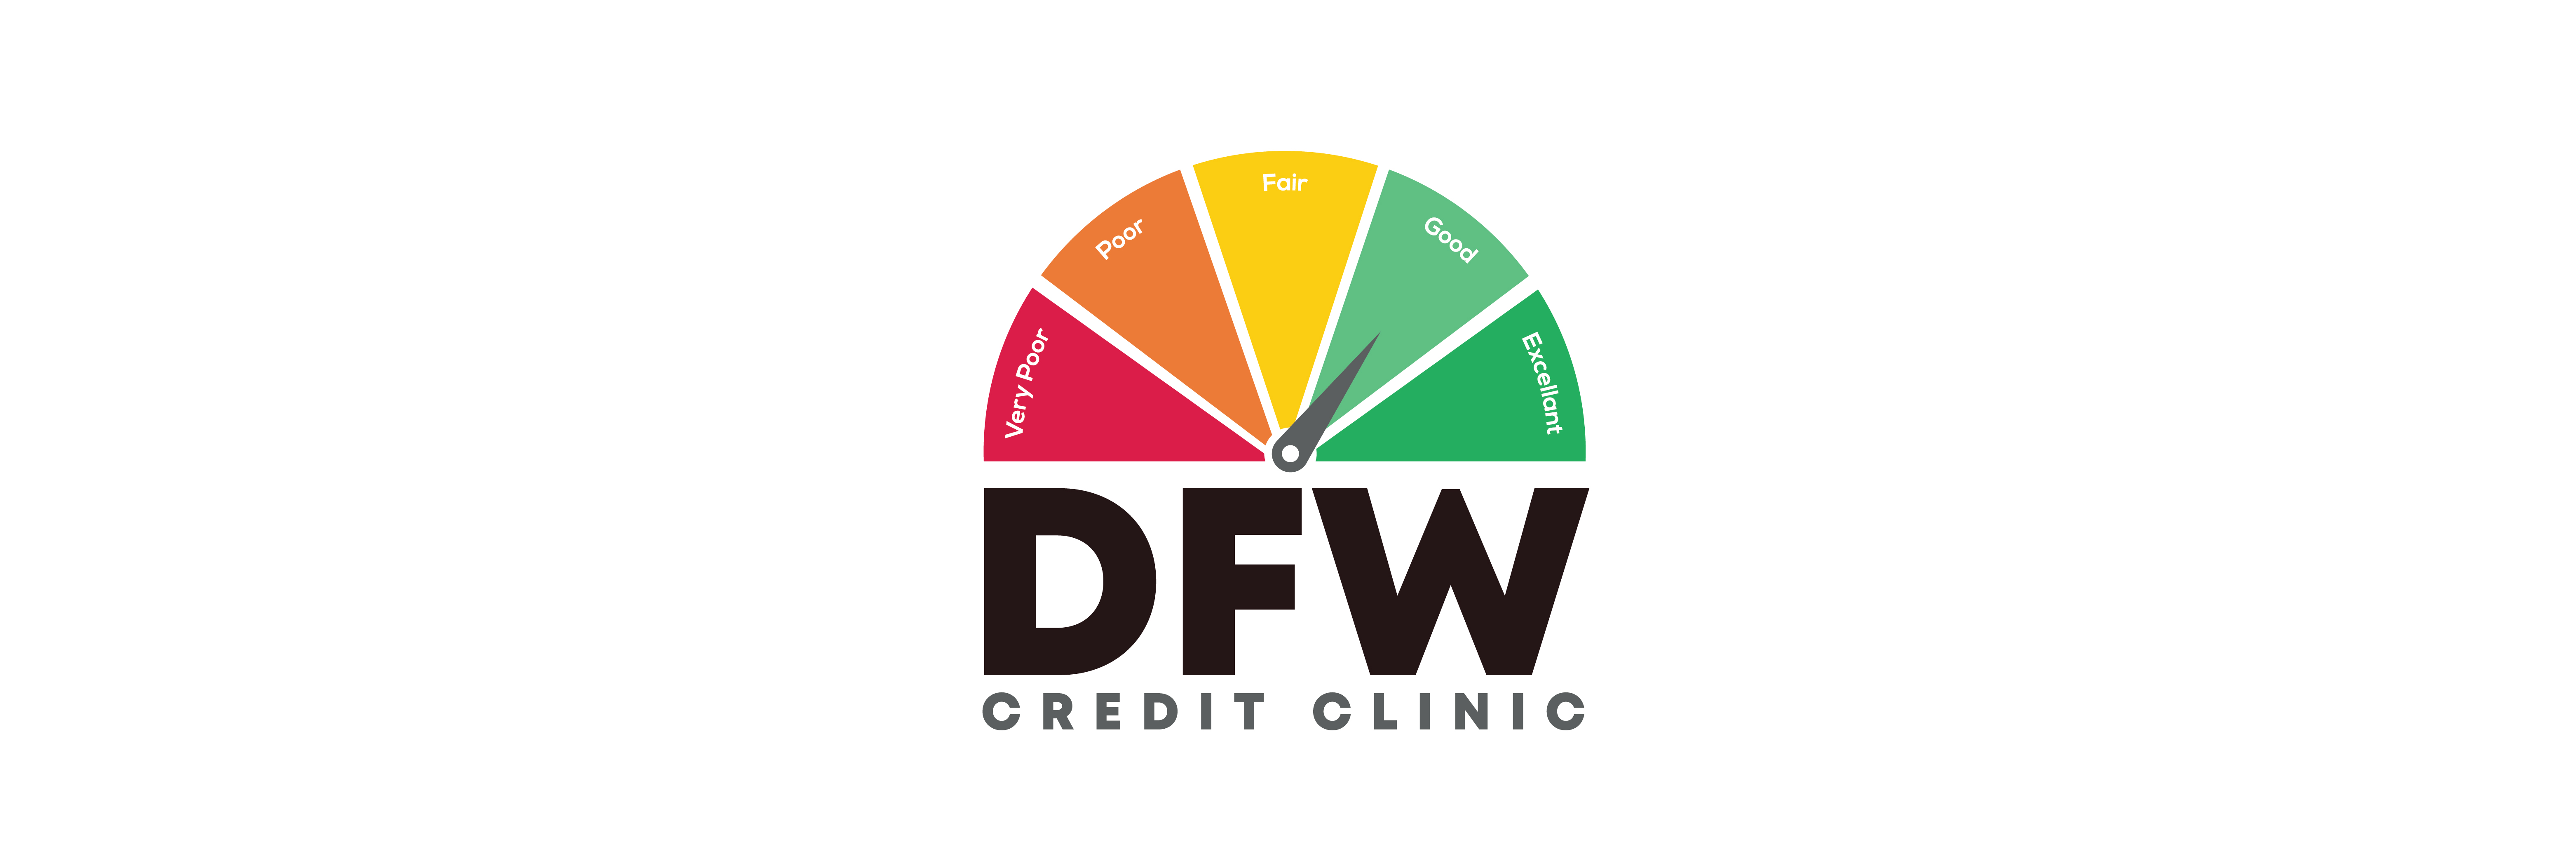 DFW-Credit-Clinic-LOGO.jpg